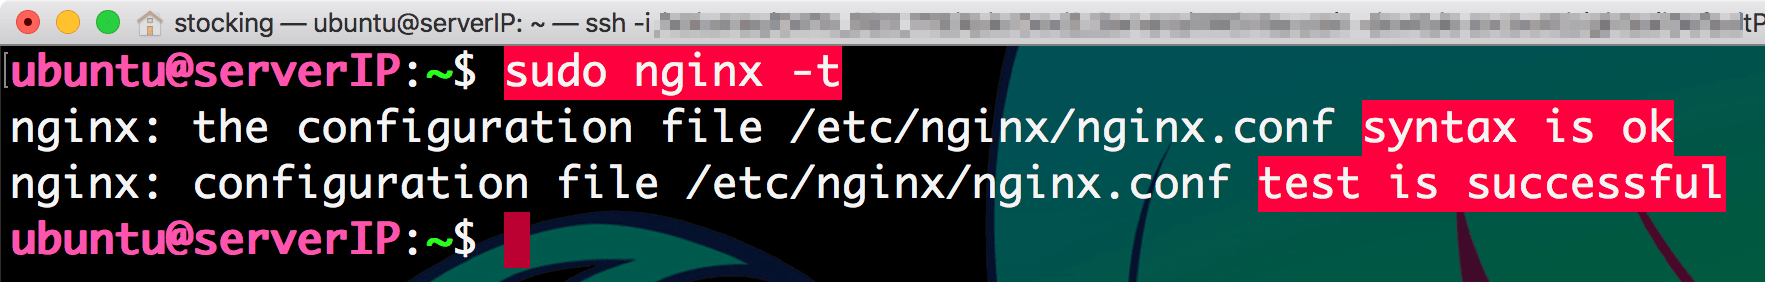 nginx 설정파일 신텍스 에러가 없는지 확인. syntax is ok 그리고 test is successful 이라고 나왔다.